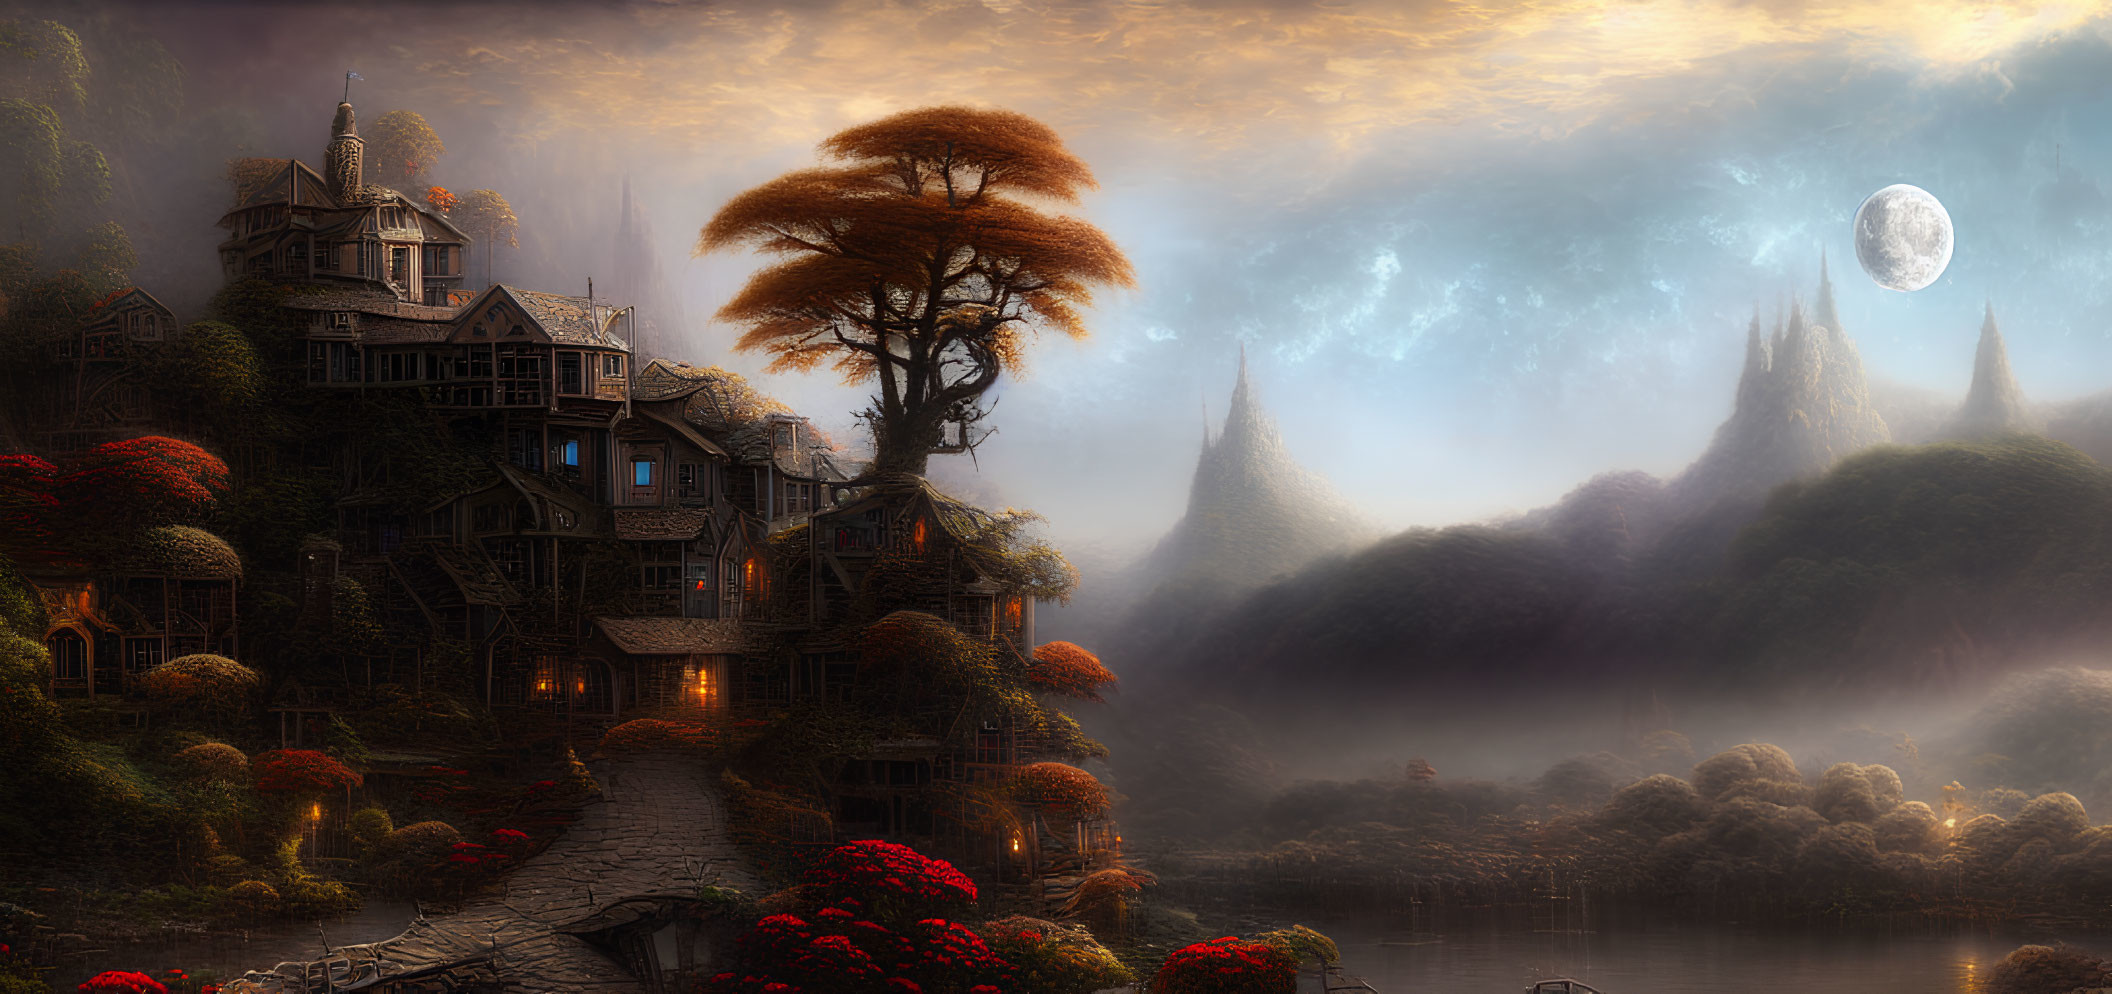 Intricate house in fantastical autumn landscape